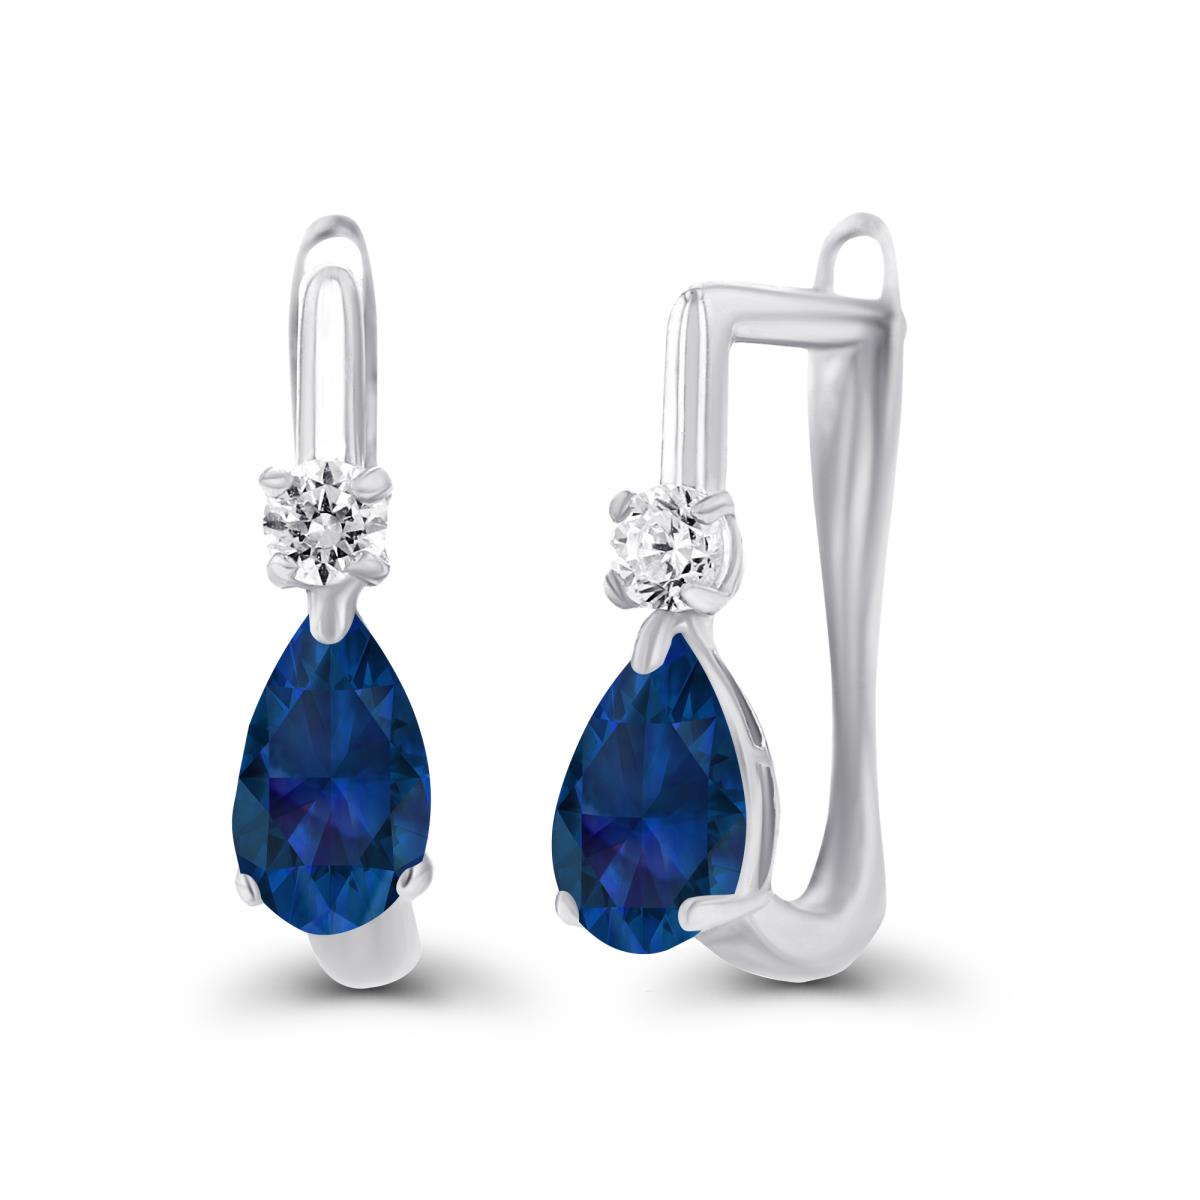 14K White Gold 5x3mm Pear Created Blue Sapphire & 2mm Created White Sapphire Latchback Earrings